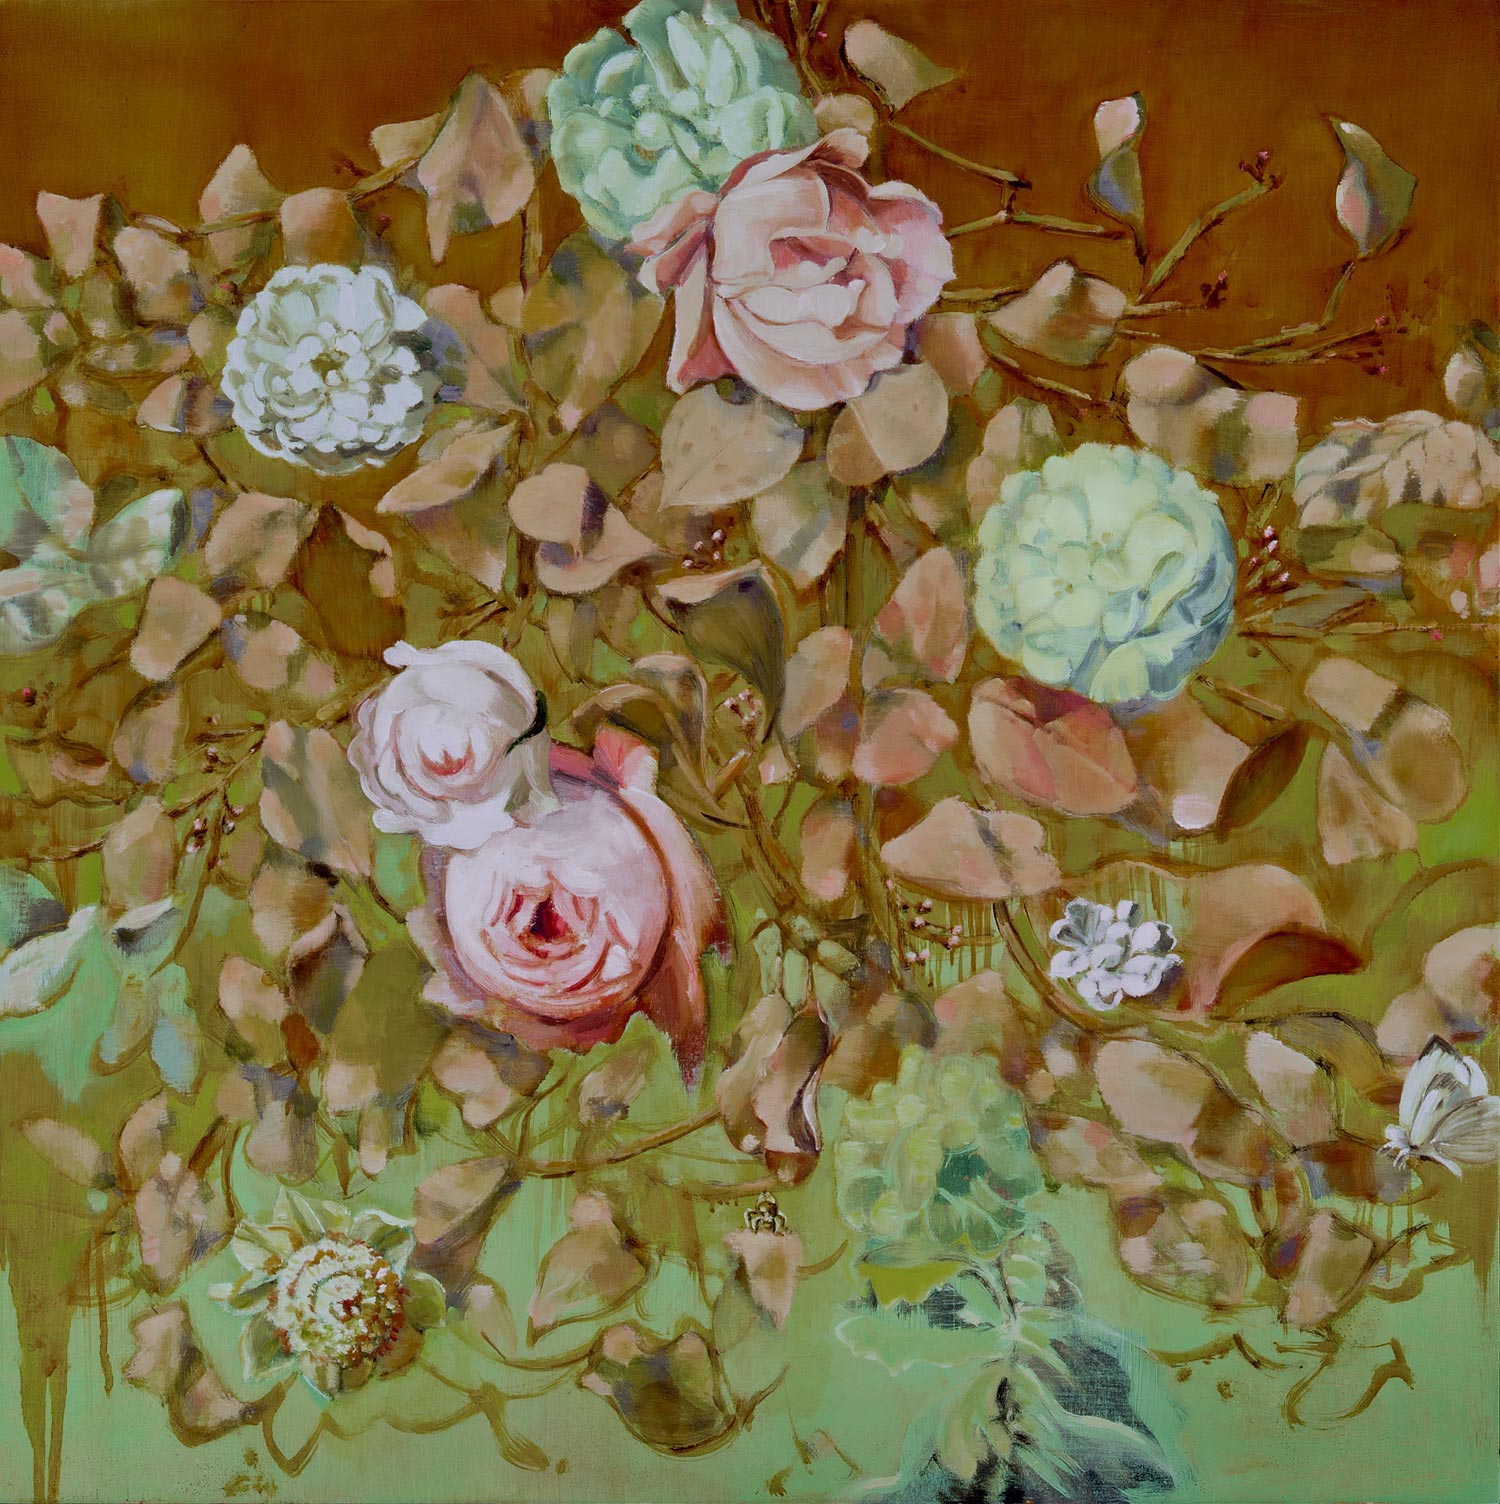 RESTORATION  oil on panel  30 x 30" 2011  Andra Norris Gallery, Burlingame, CA